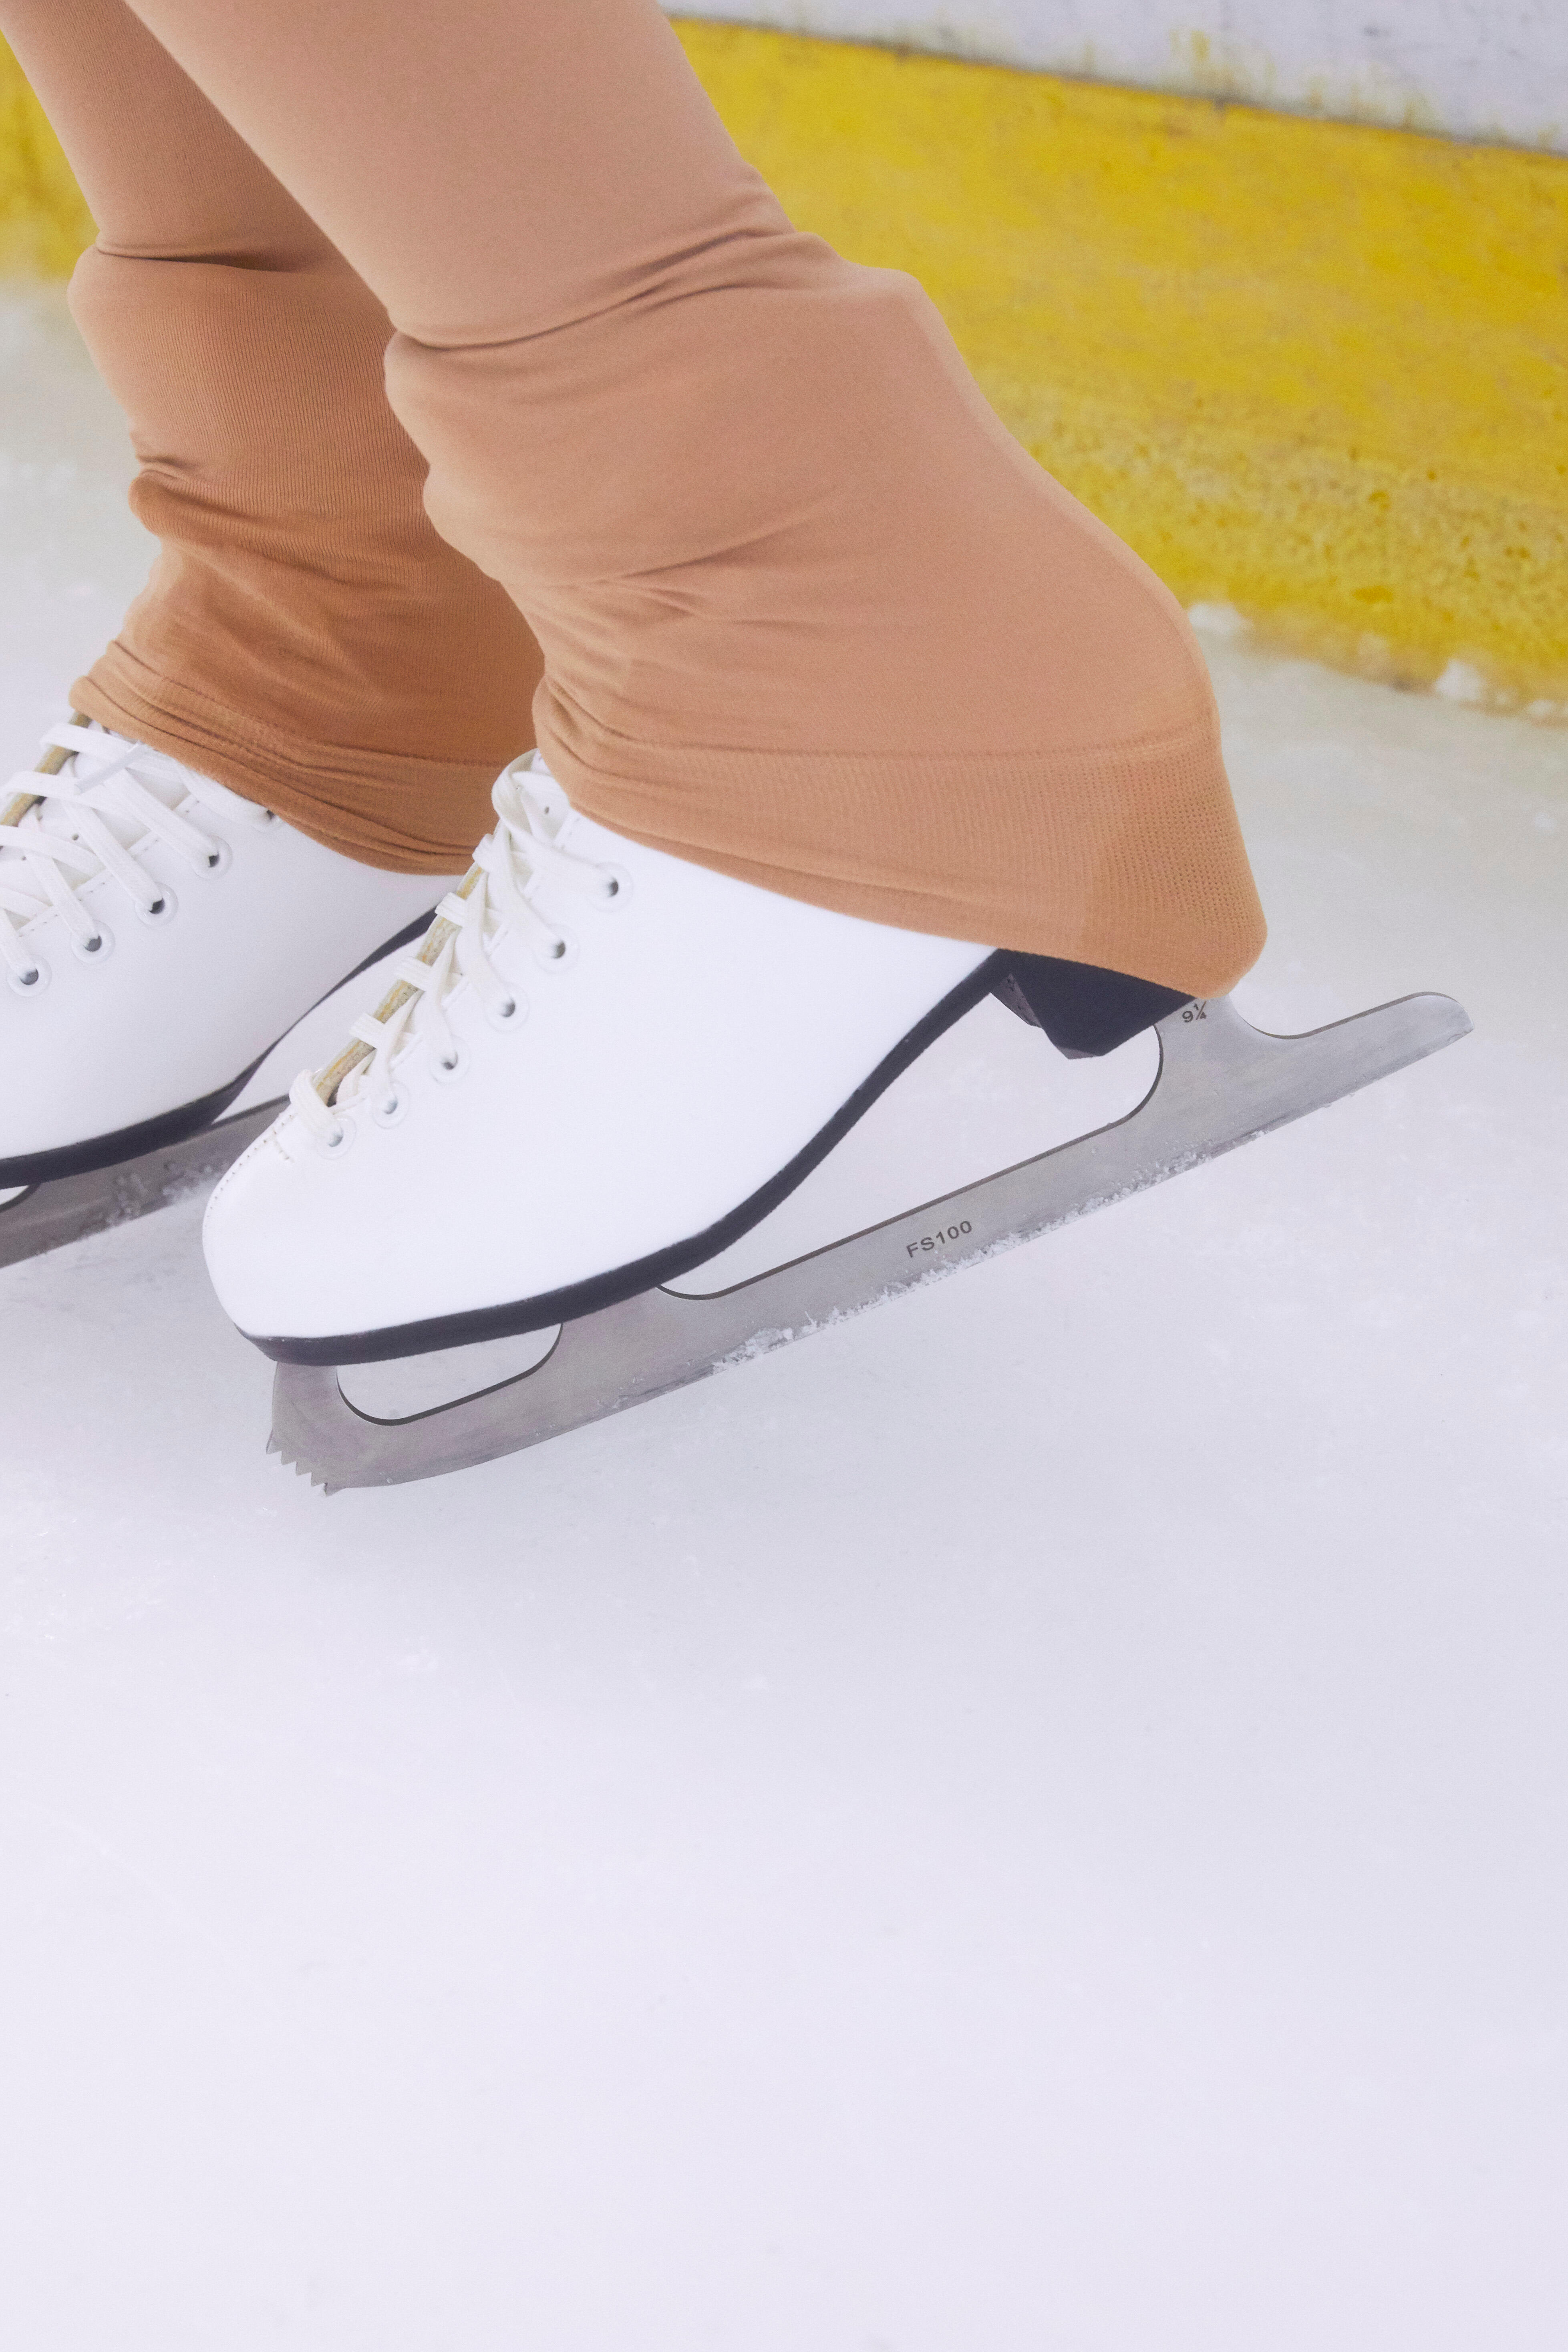 Kids' Footless Figure Skating Tights